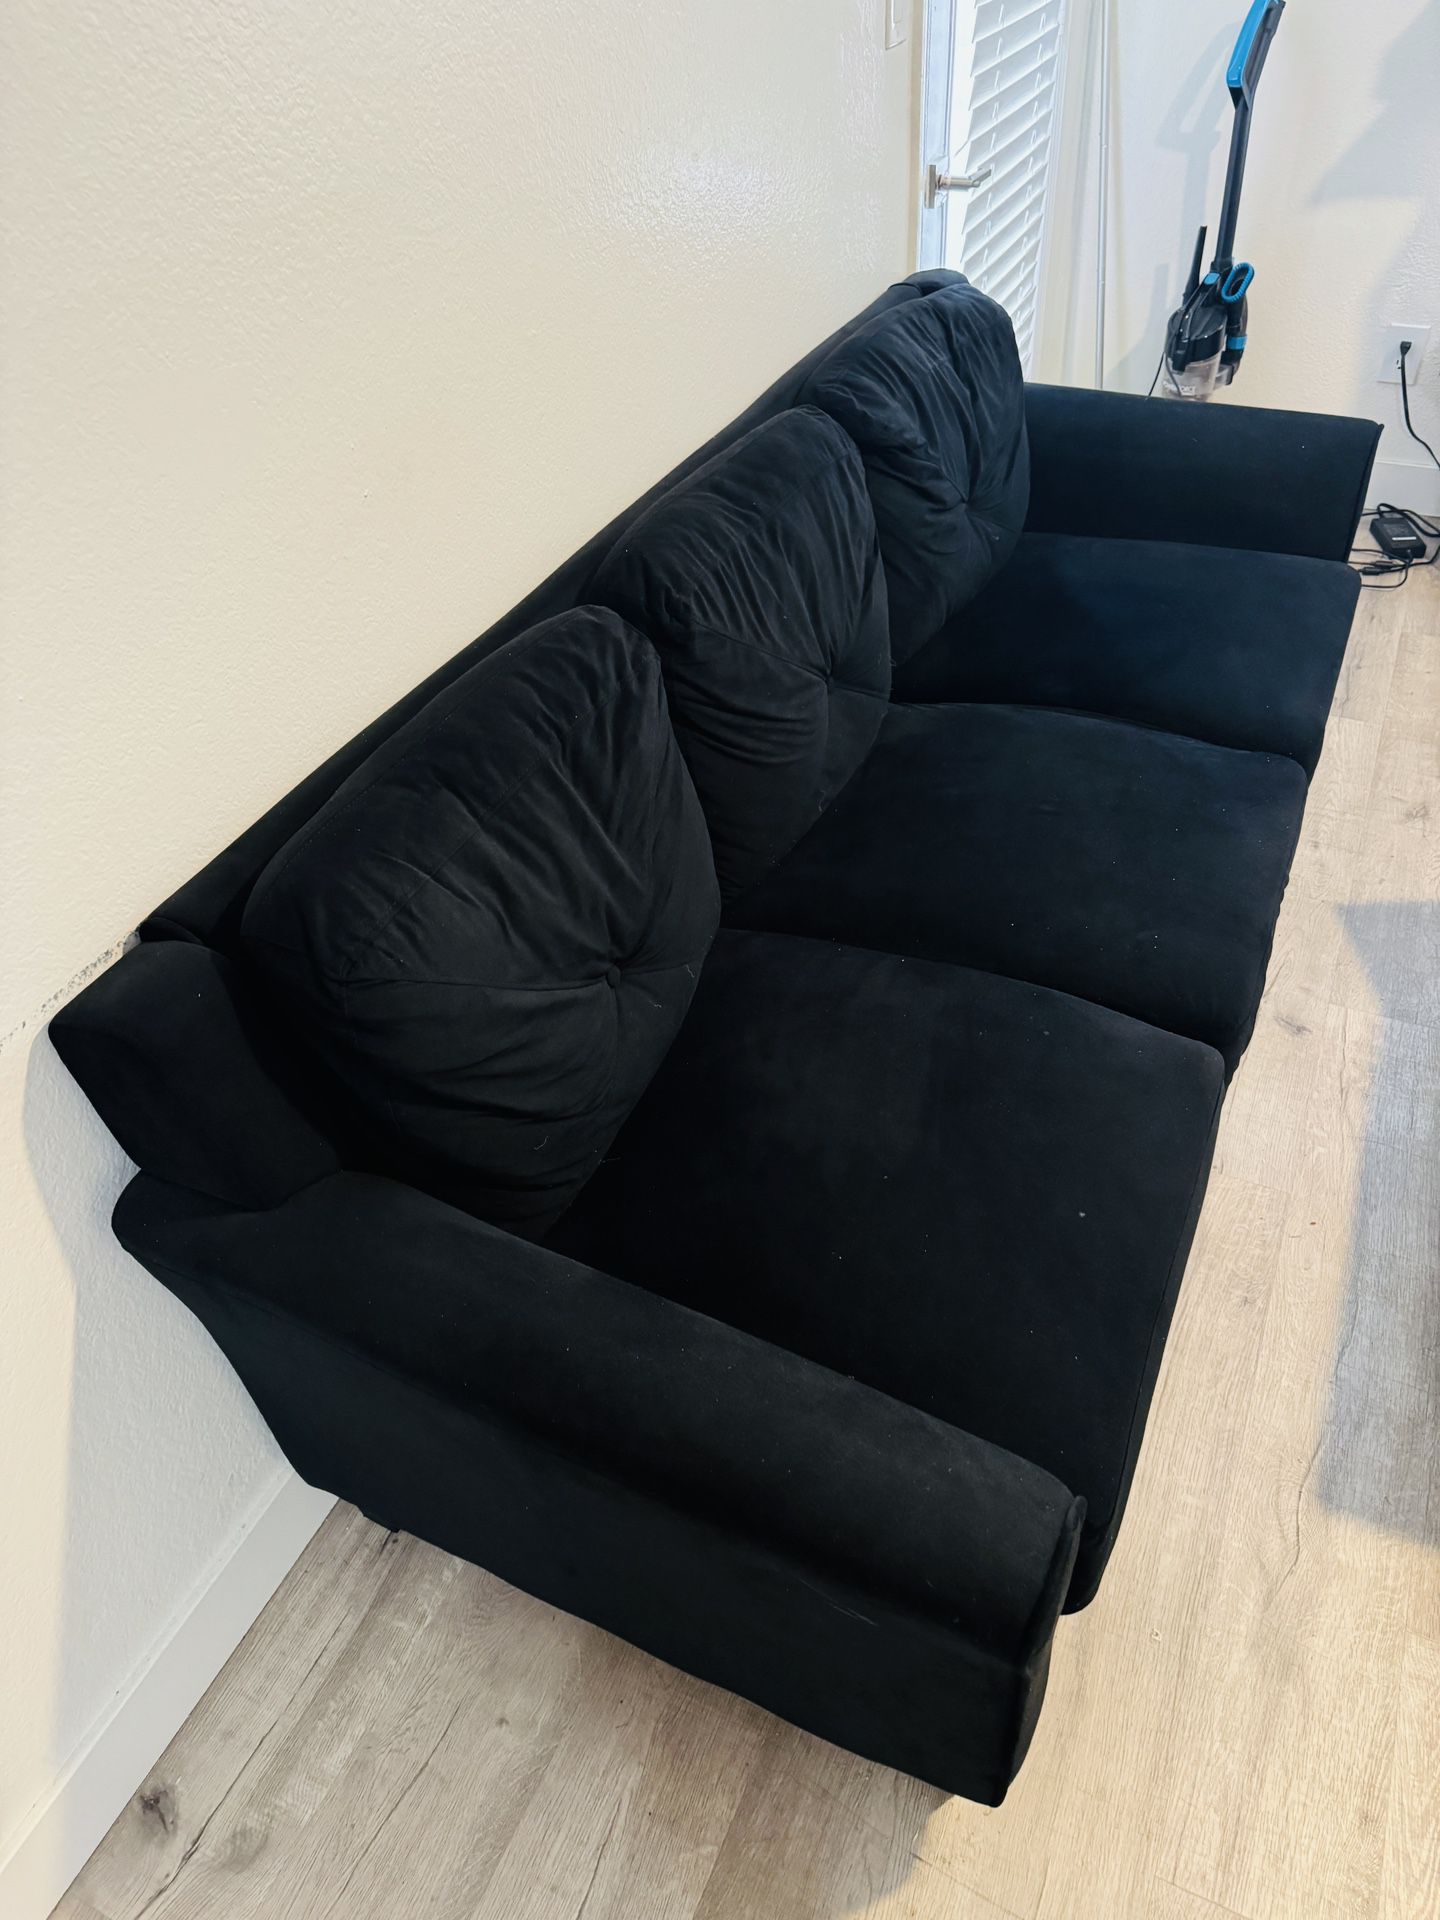 Ikea - 3 seater comfy sofa - Good condition